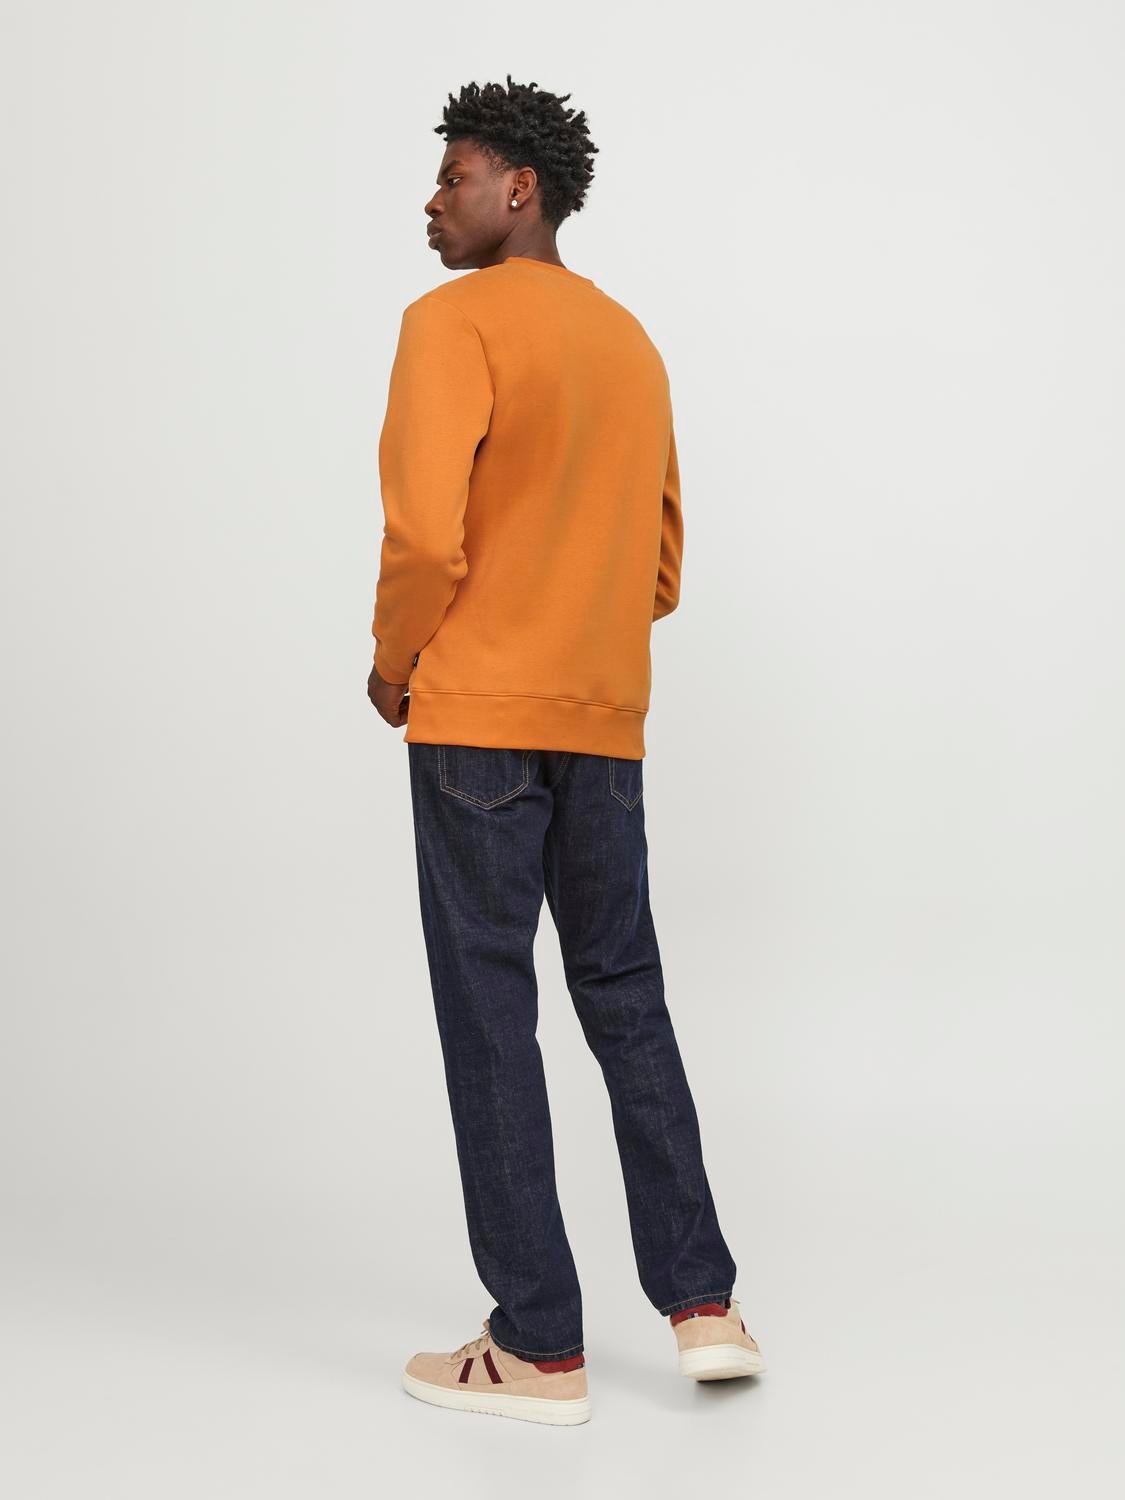 Jack & Jones Plain Crew neck Sweatshirt -Peach Caramel - 12250403